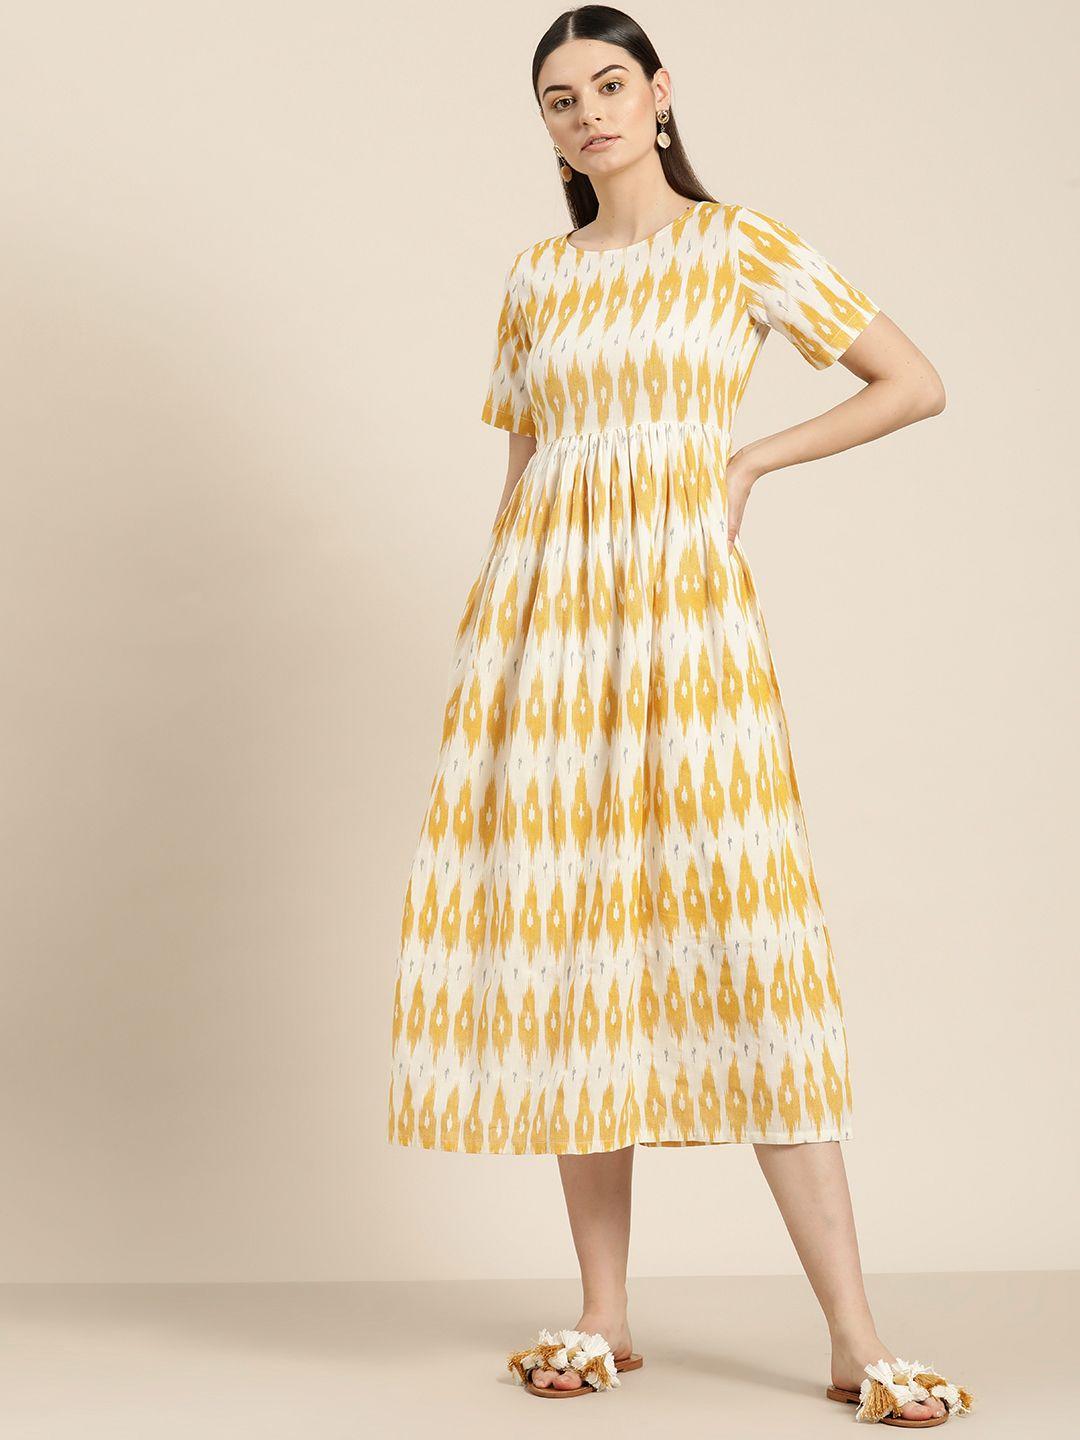 shae by sassafras women off-white & mustard yellow ikat print a-line dress